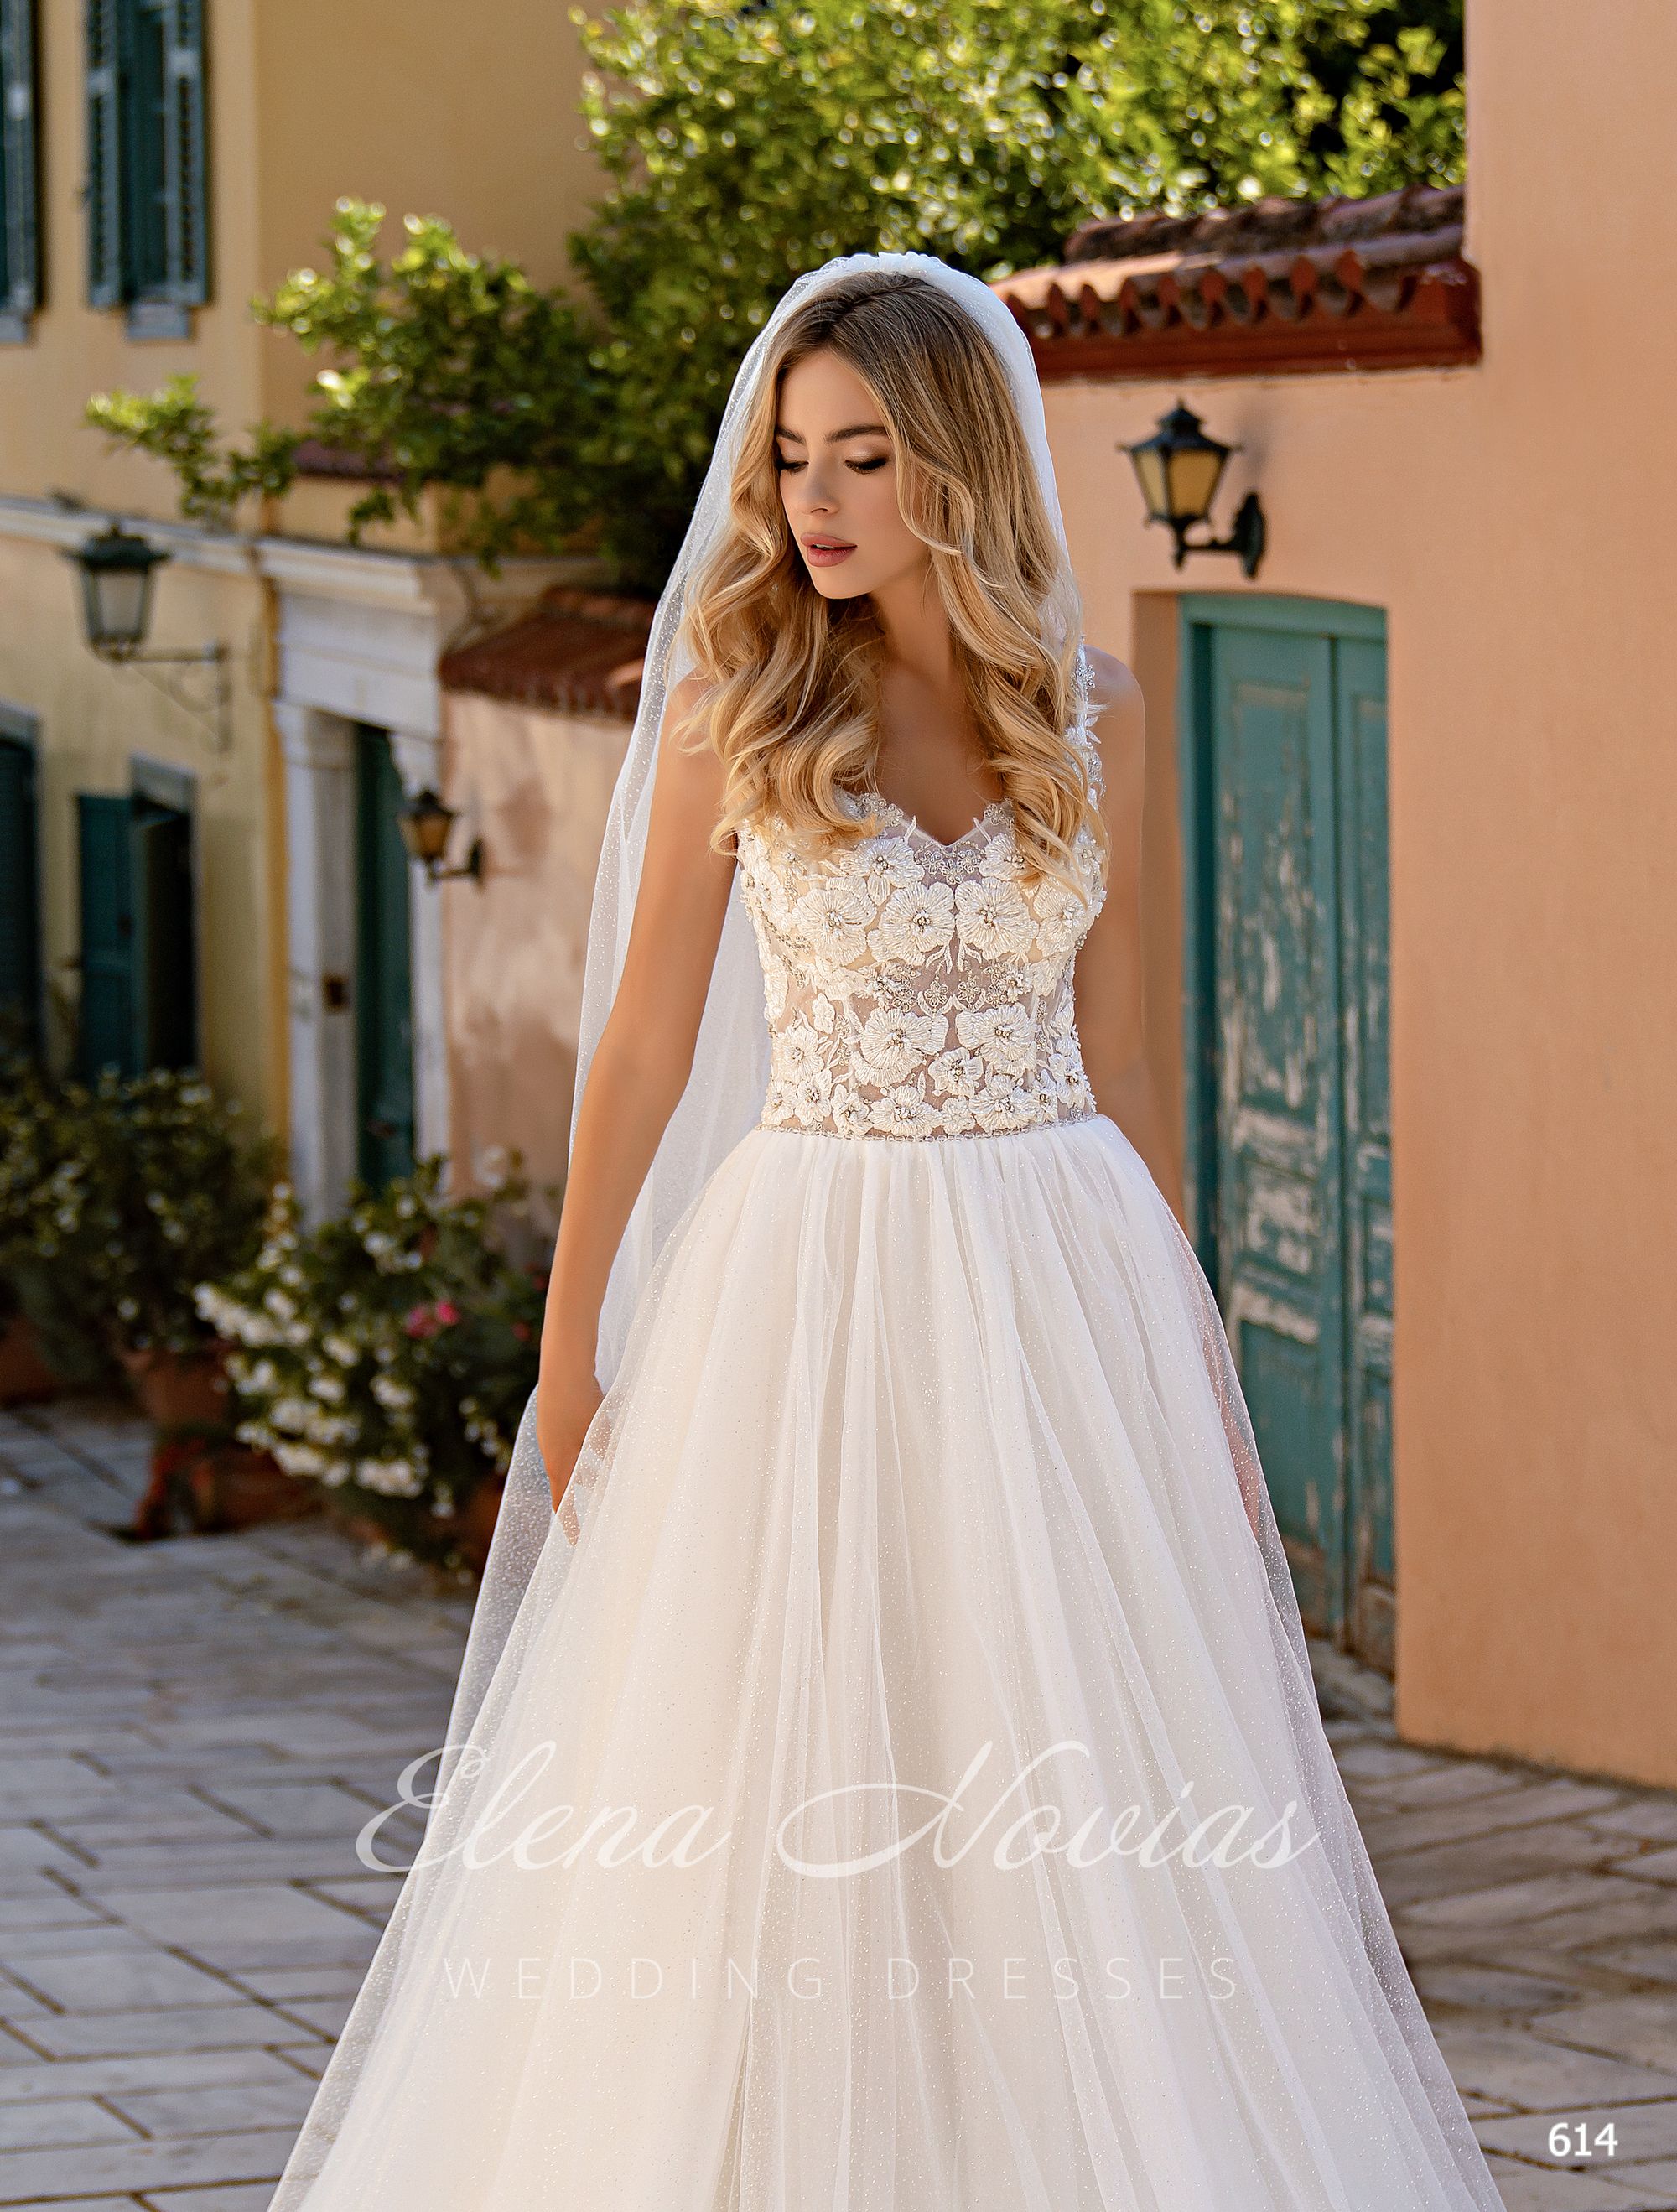 Wedding dresses 614 1